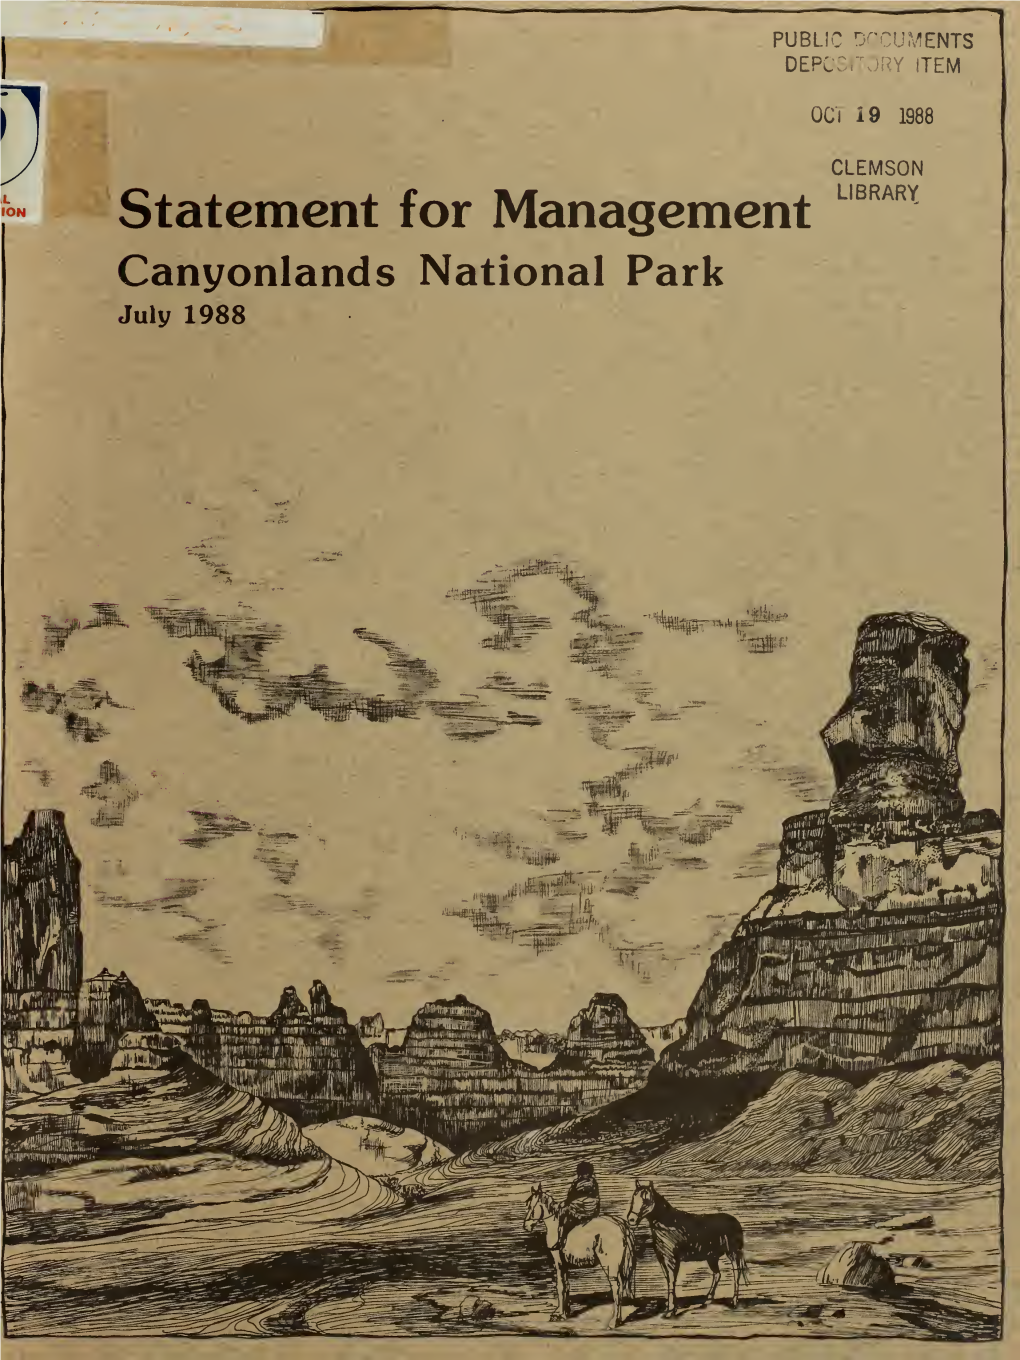 Statement for Management: Canyonlands National Park